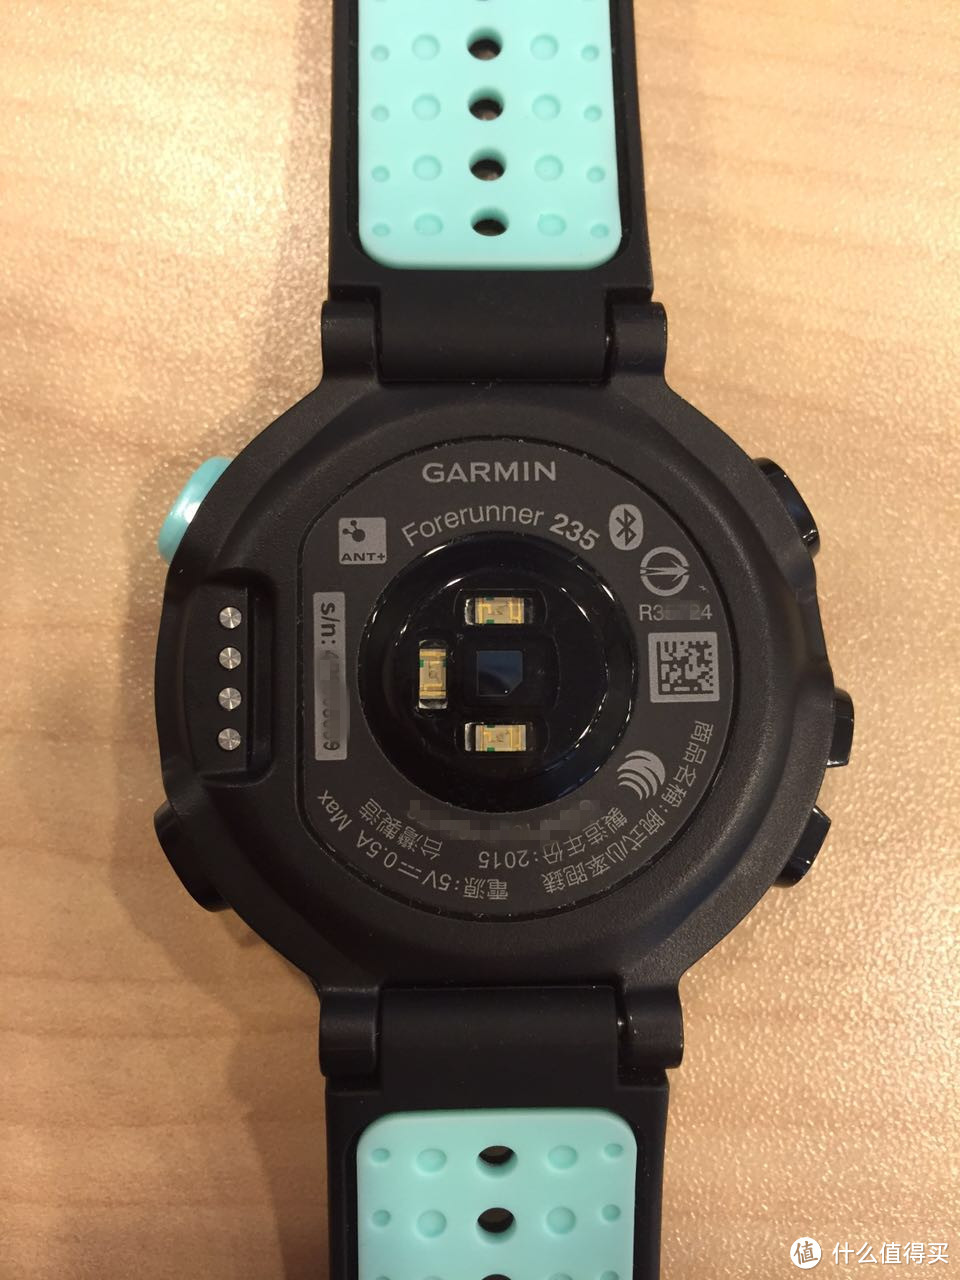 GARMIN 佳明 FORERUNNER 235 GPS心率表（台湾版） 开箱与评测